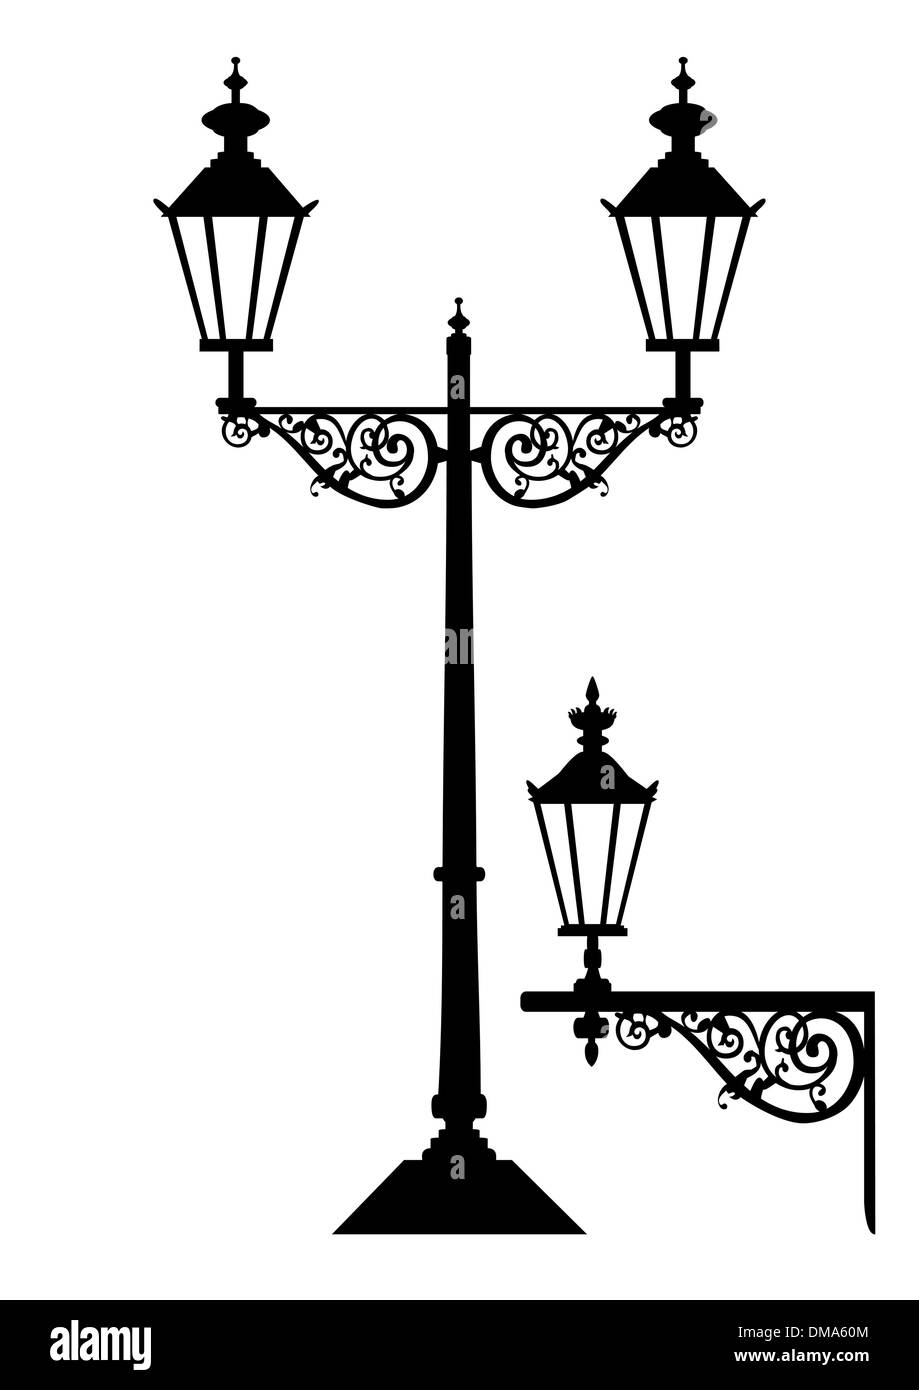 Set of antique street light lamps Stock Vector